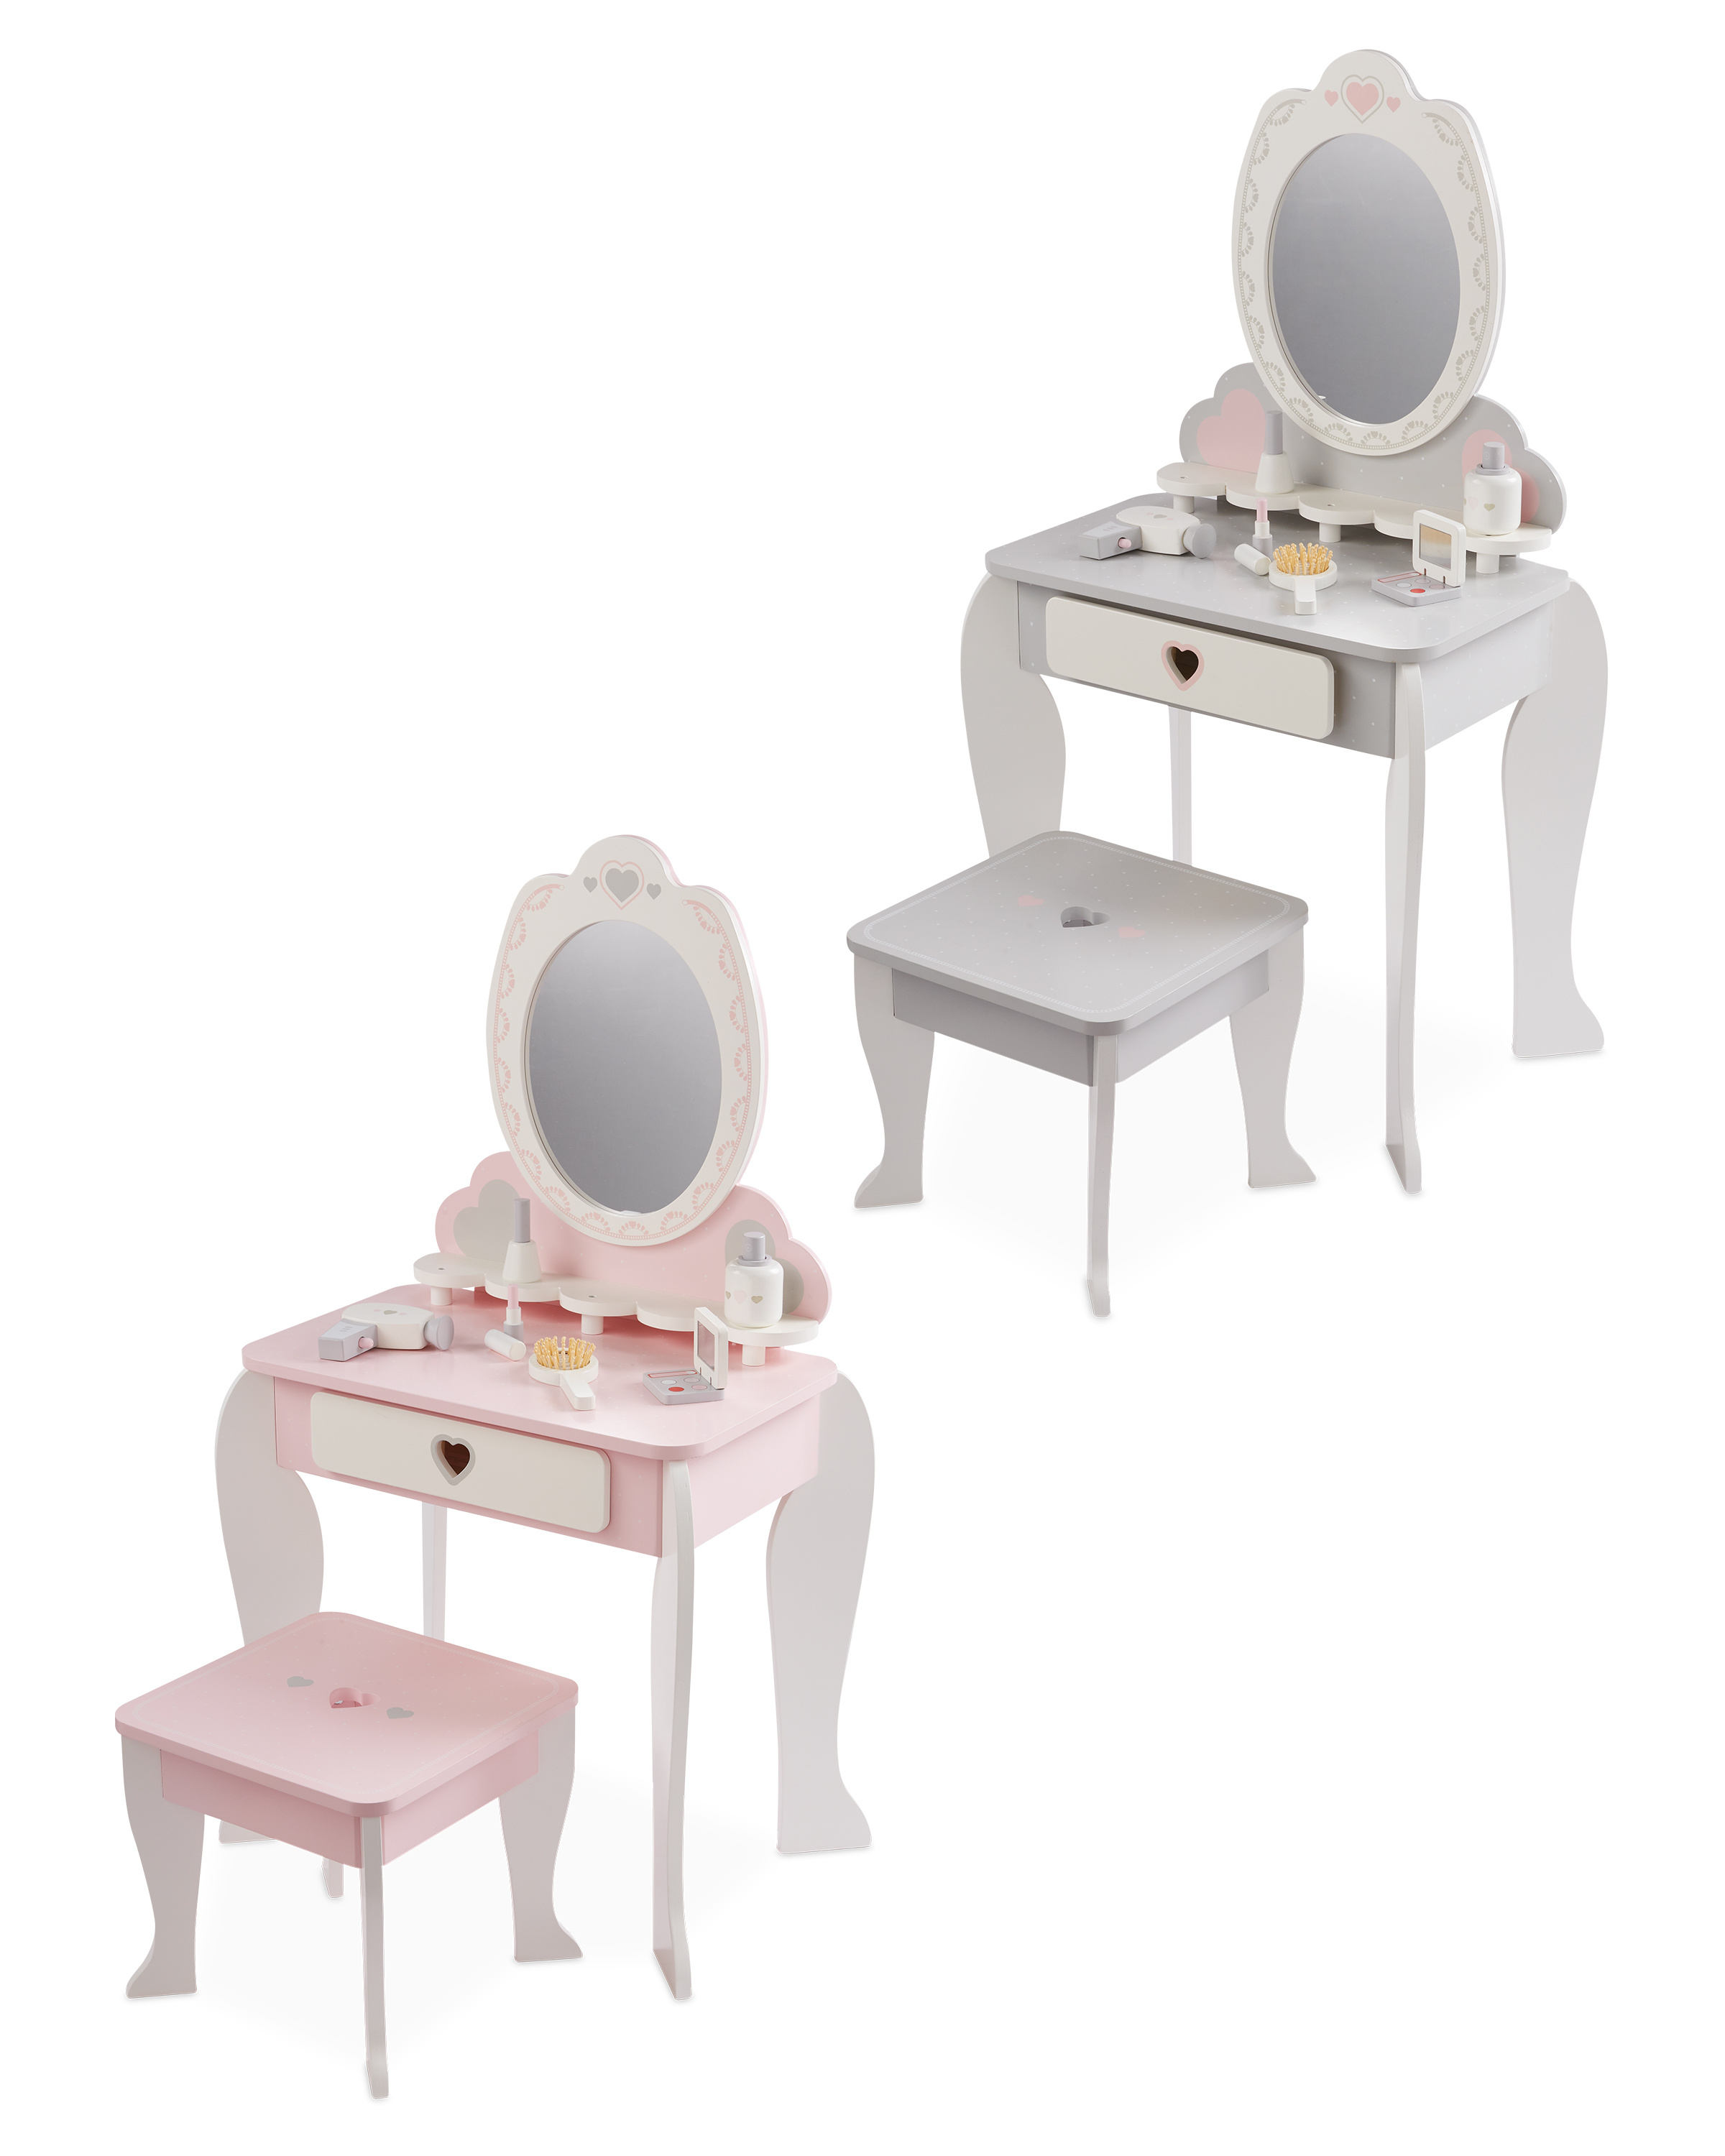 Toy Vanity Unit Accessories Aldi Uk, Vanity Set For Toddler